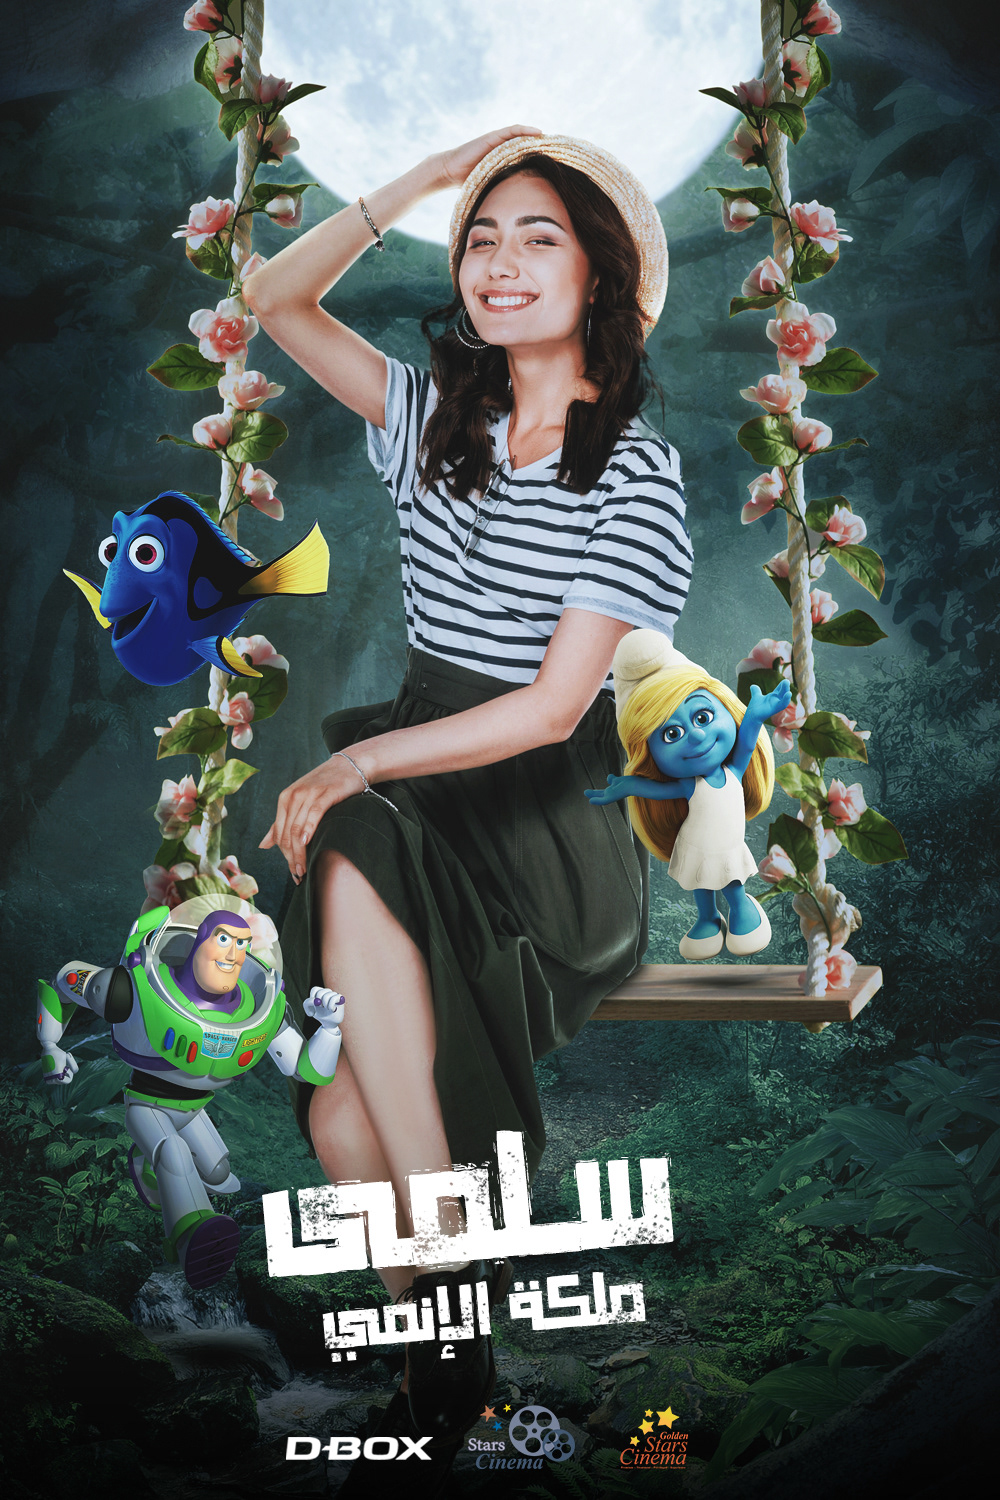 ads Cinema creative ads egypt movie posters social media Stars cinema dbox manipulation